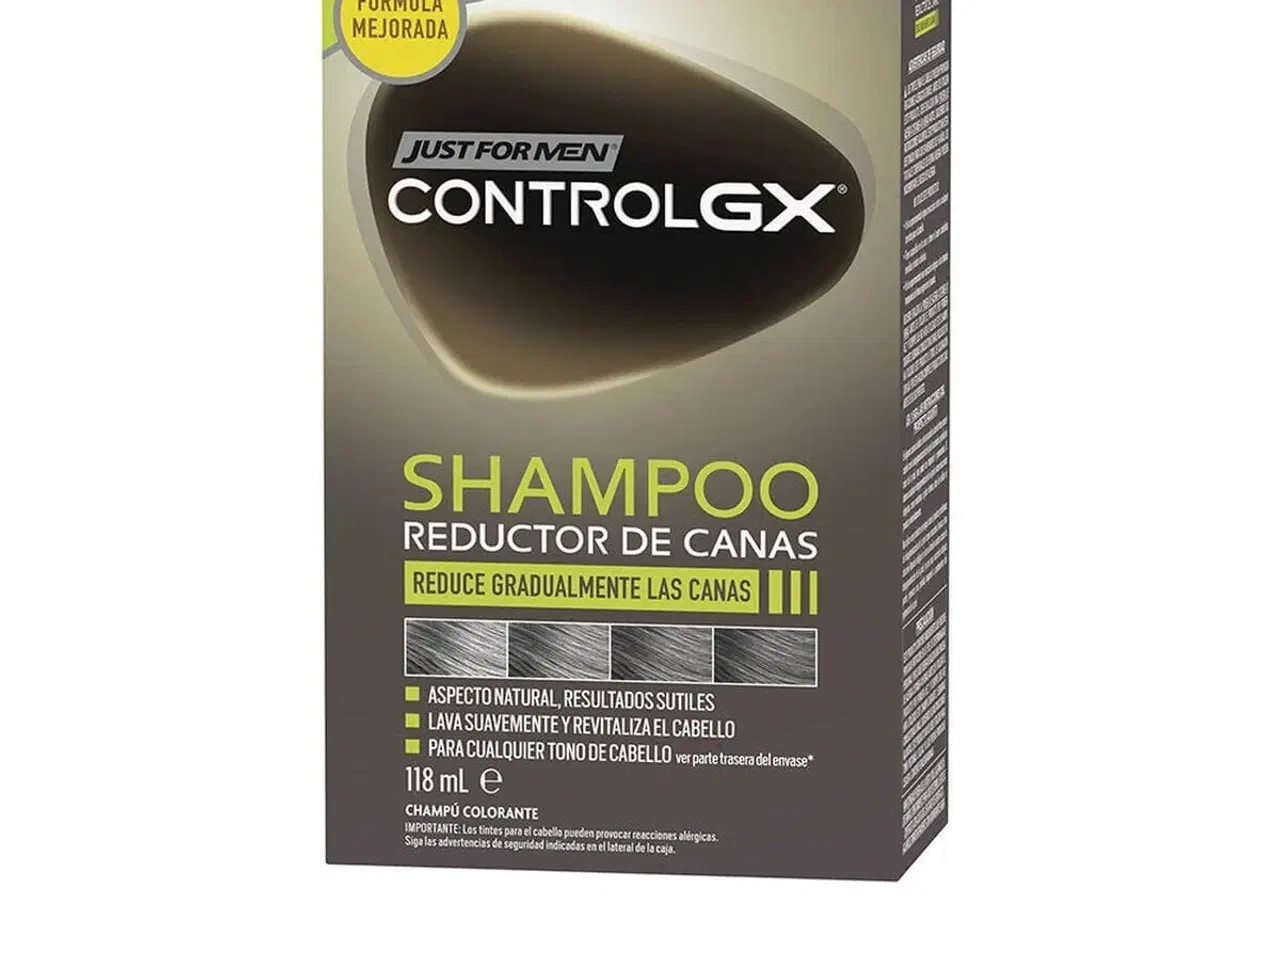 Billede 1 - Shampoo Just For Men Control Gx 118 ml